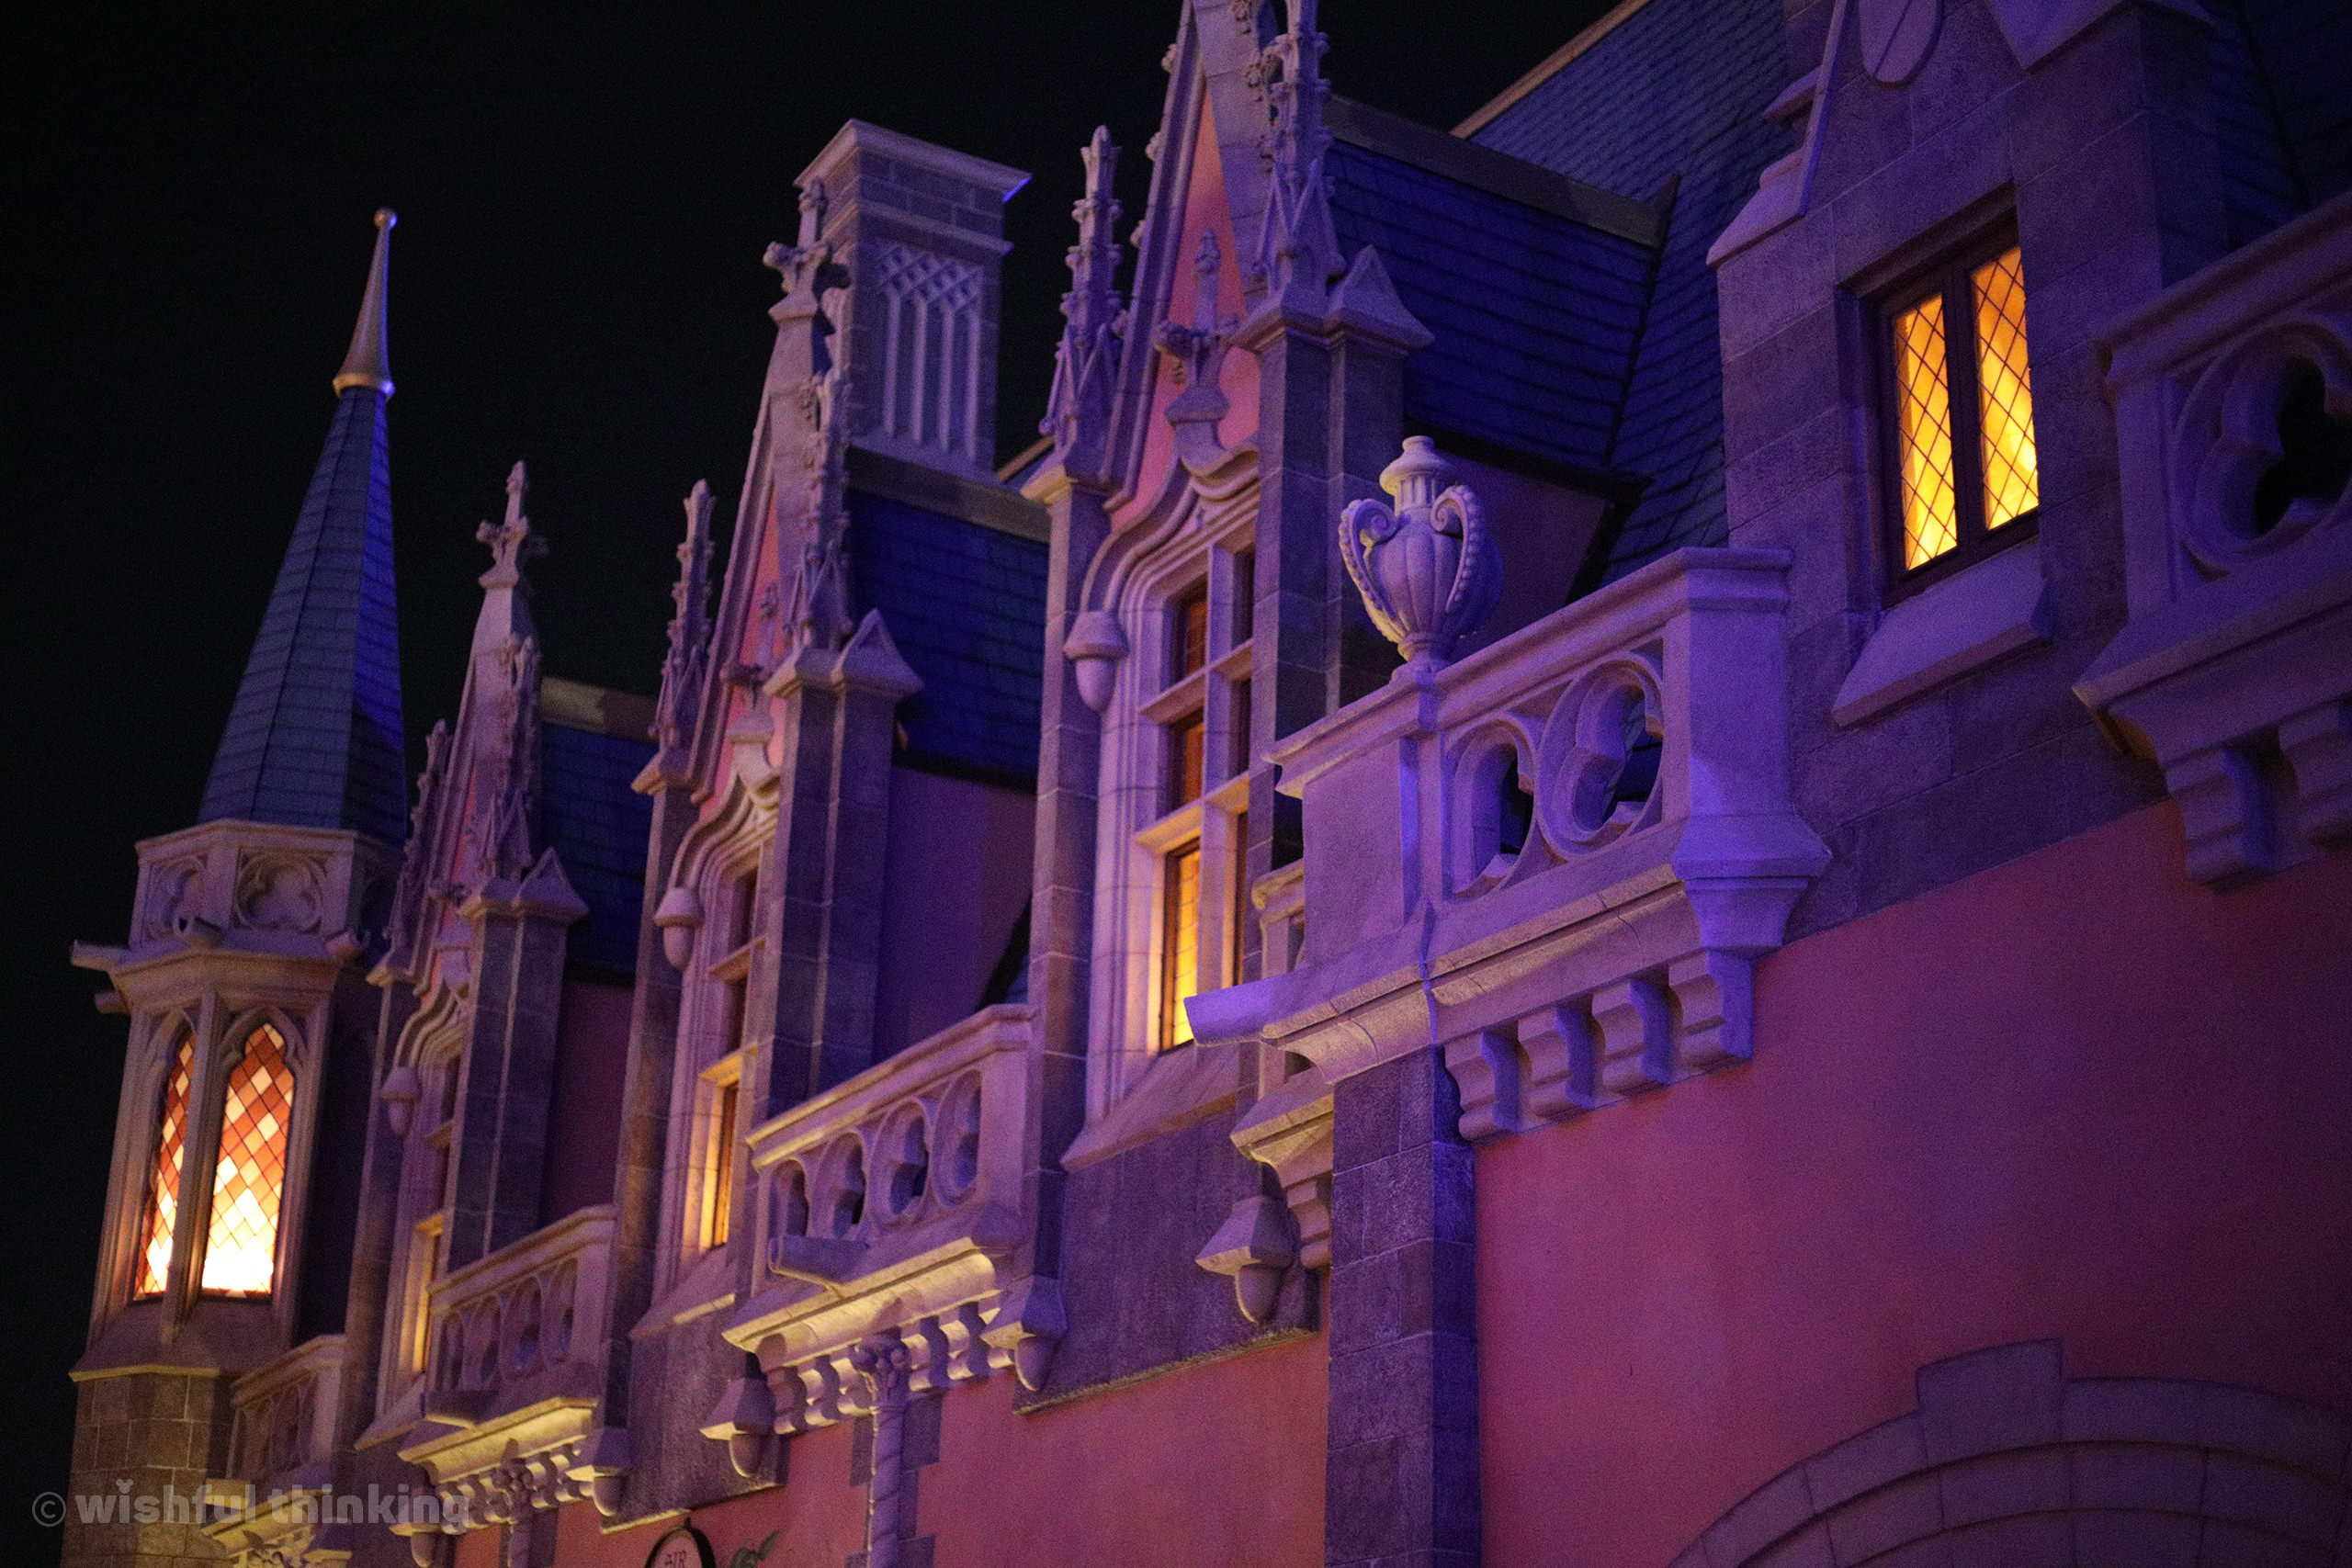 Fantasyland glows from castle balconies within Fantasyland at Disney's Magic Kingdom Theme Park